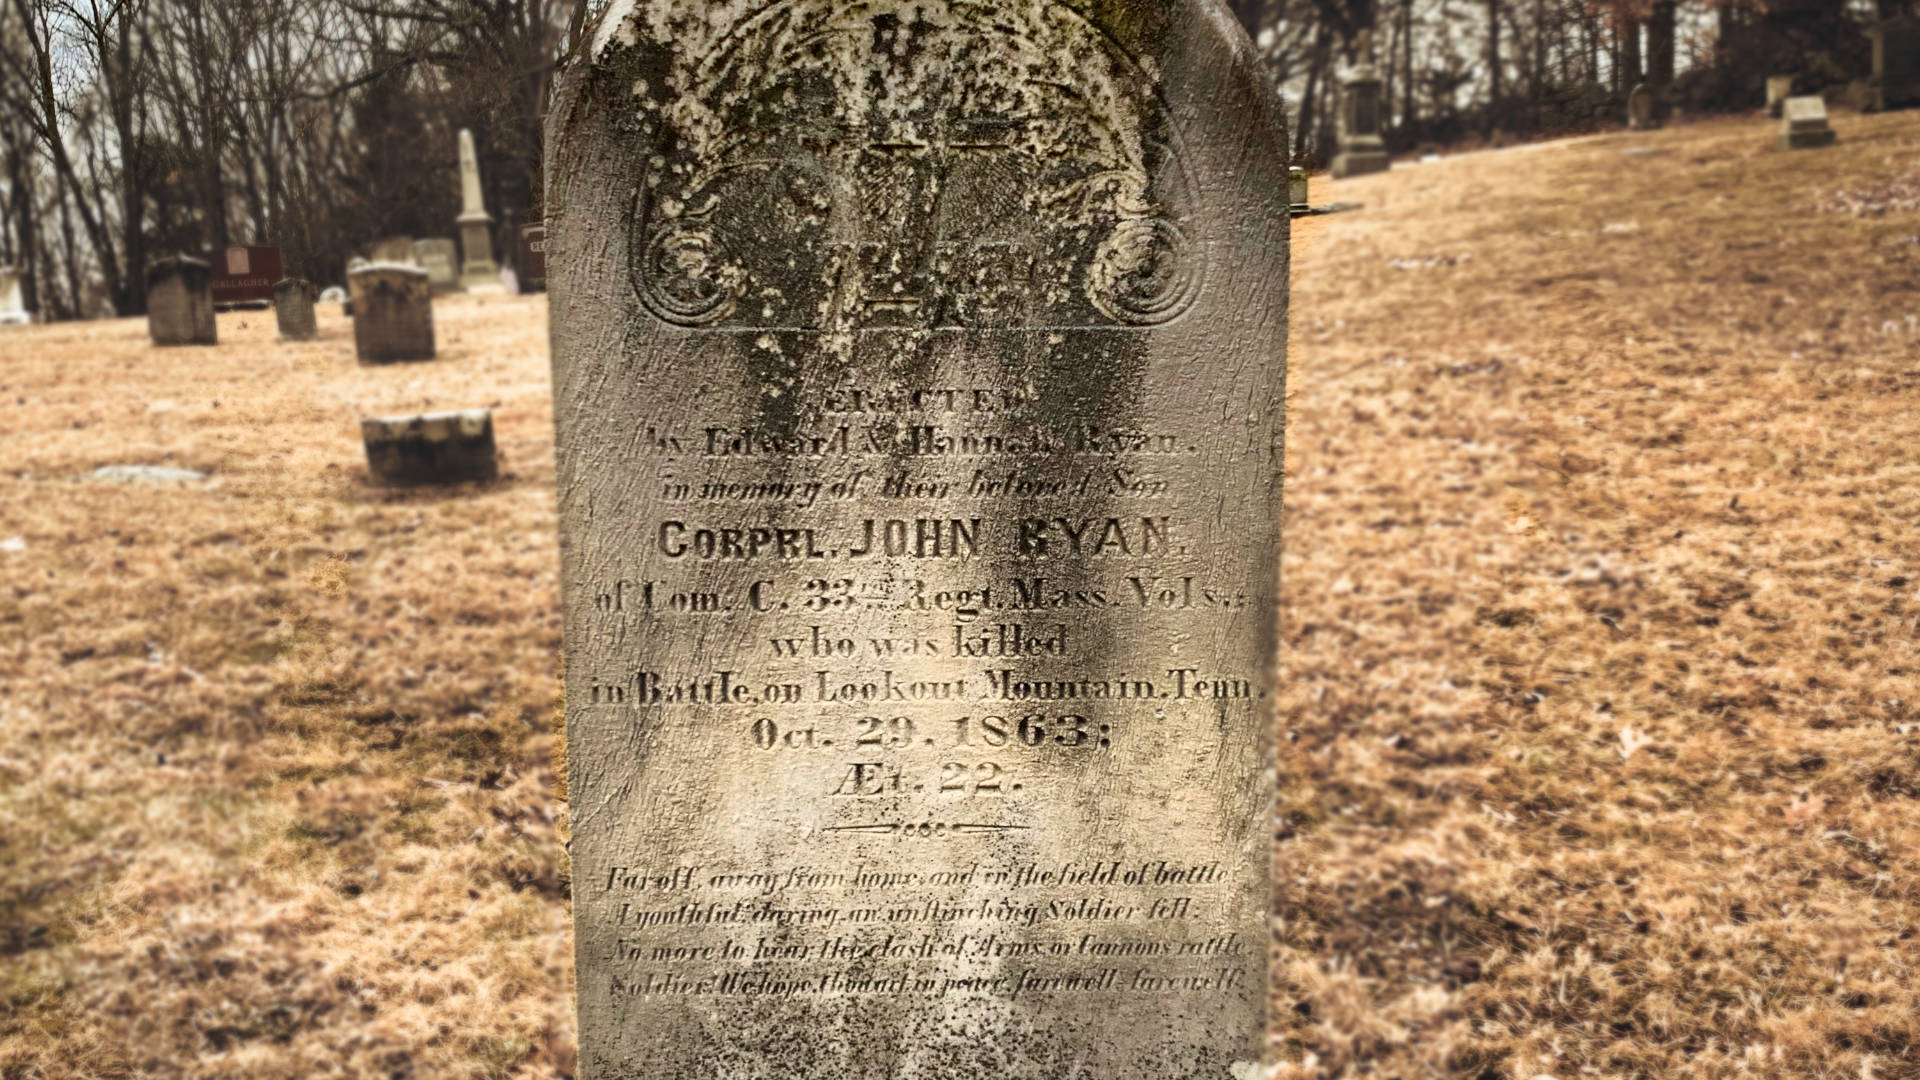 Corprl John Brown Grave